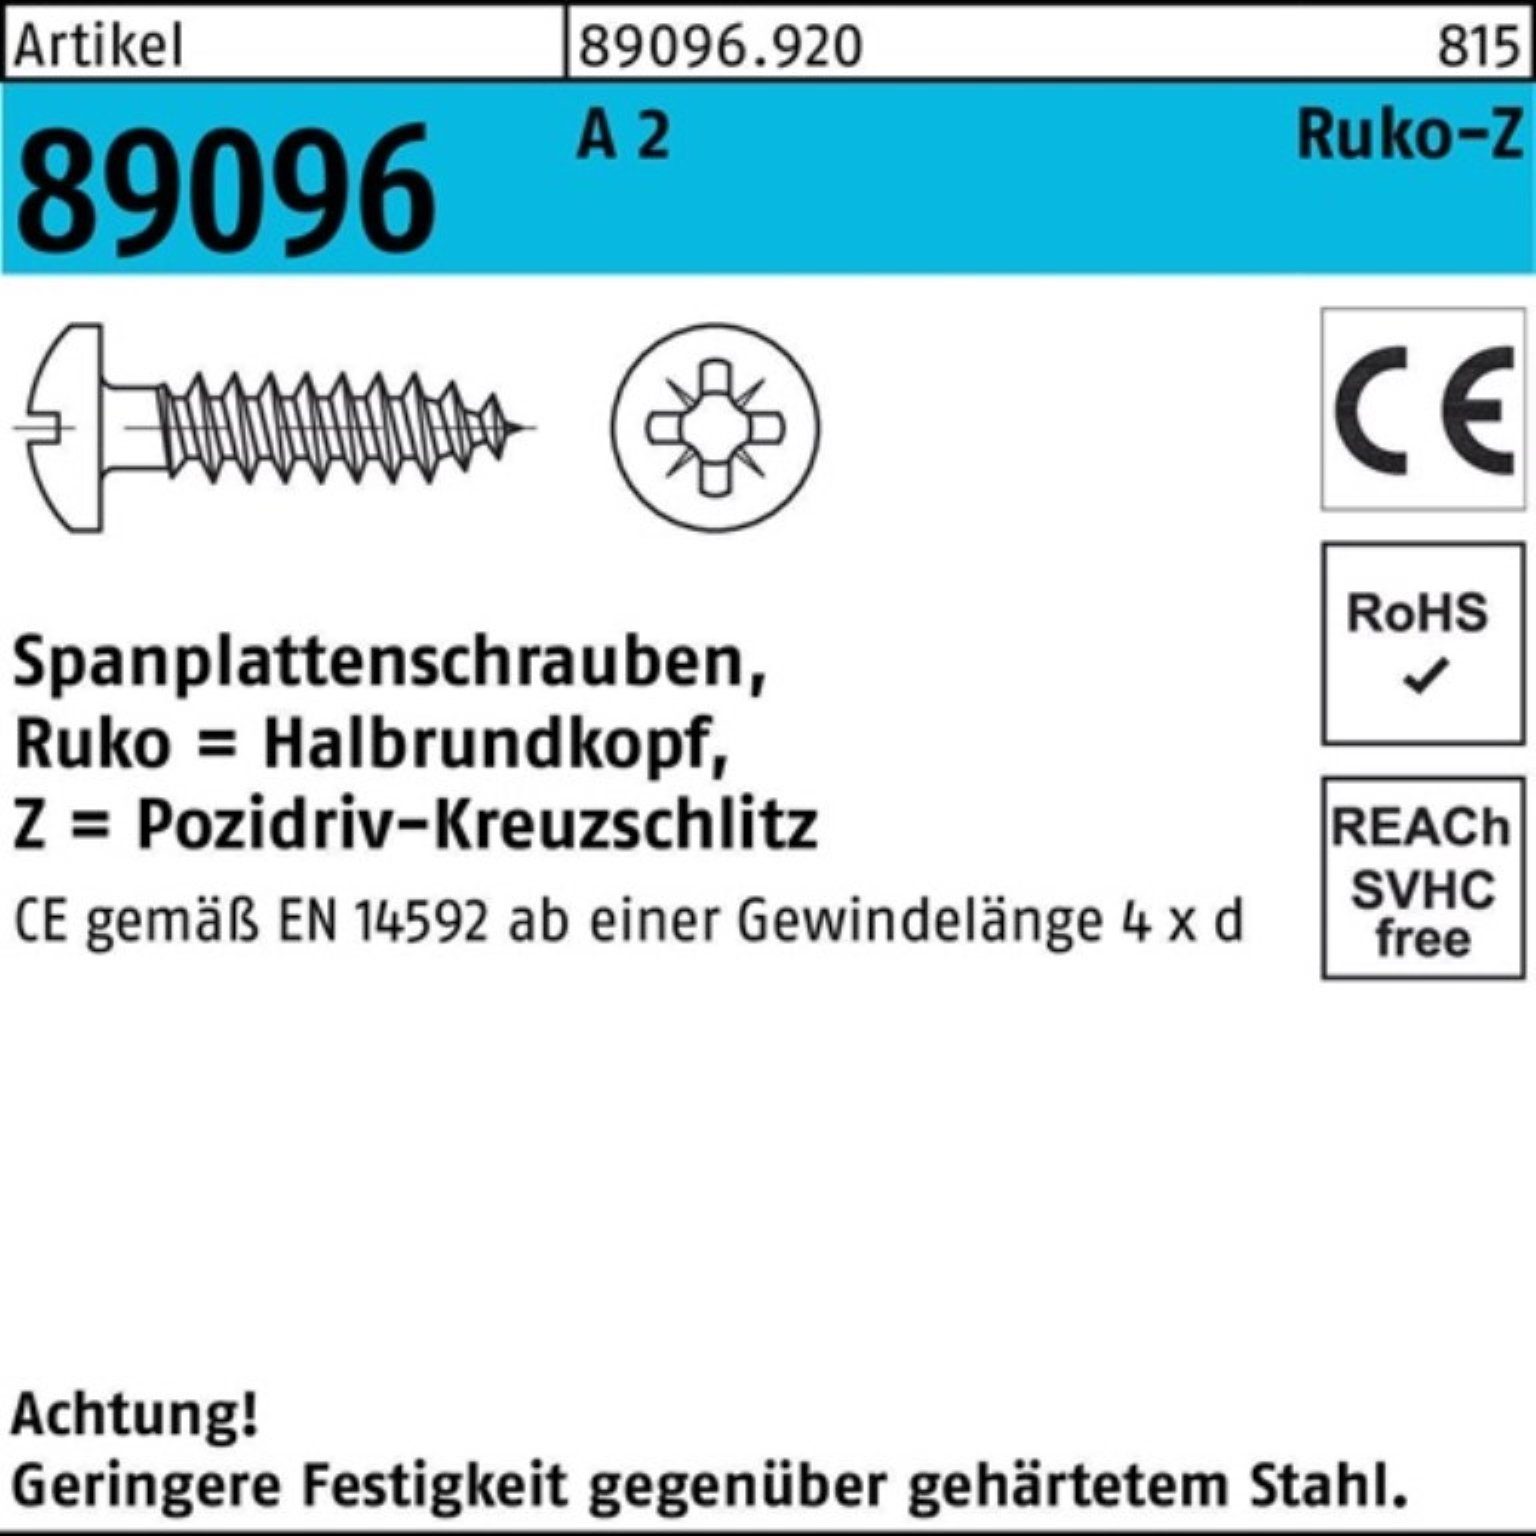 Pack 2 200 6x HAKO PZ Spanplattenschraube A R 200er 89096 Stück 60-Z Spanplattenschraube Reyher